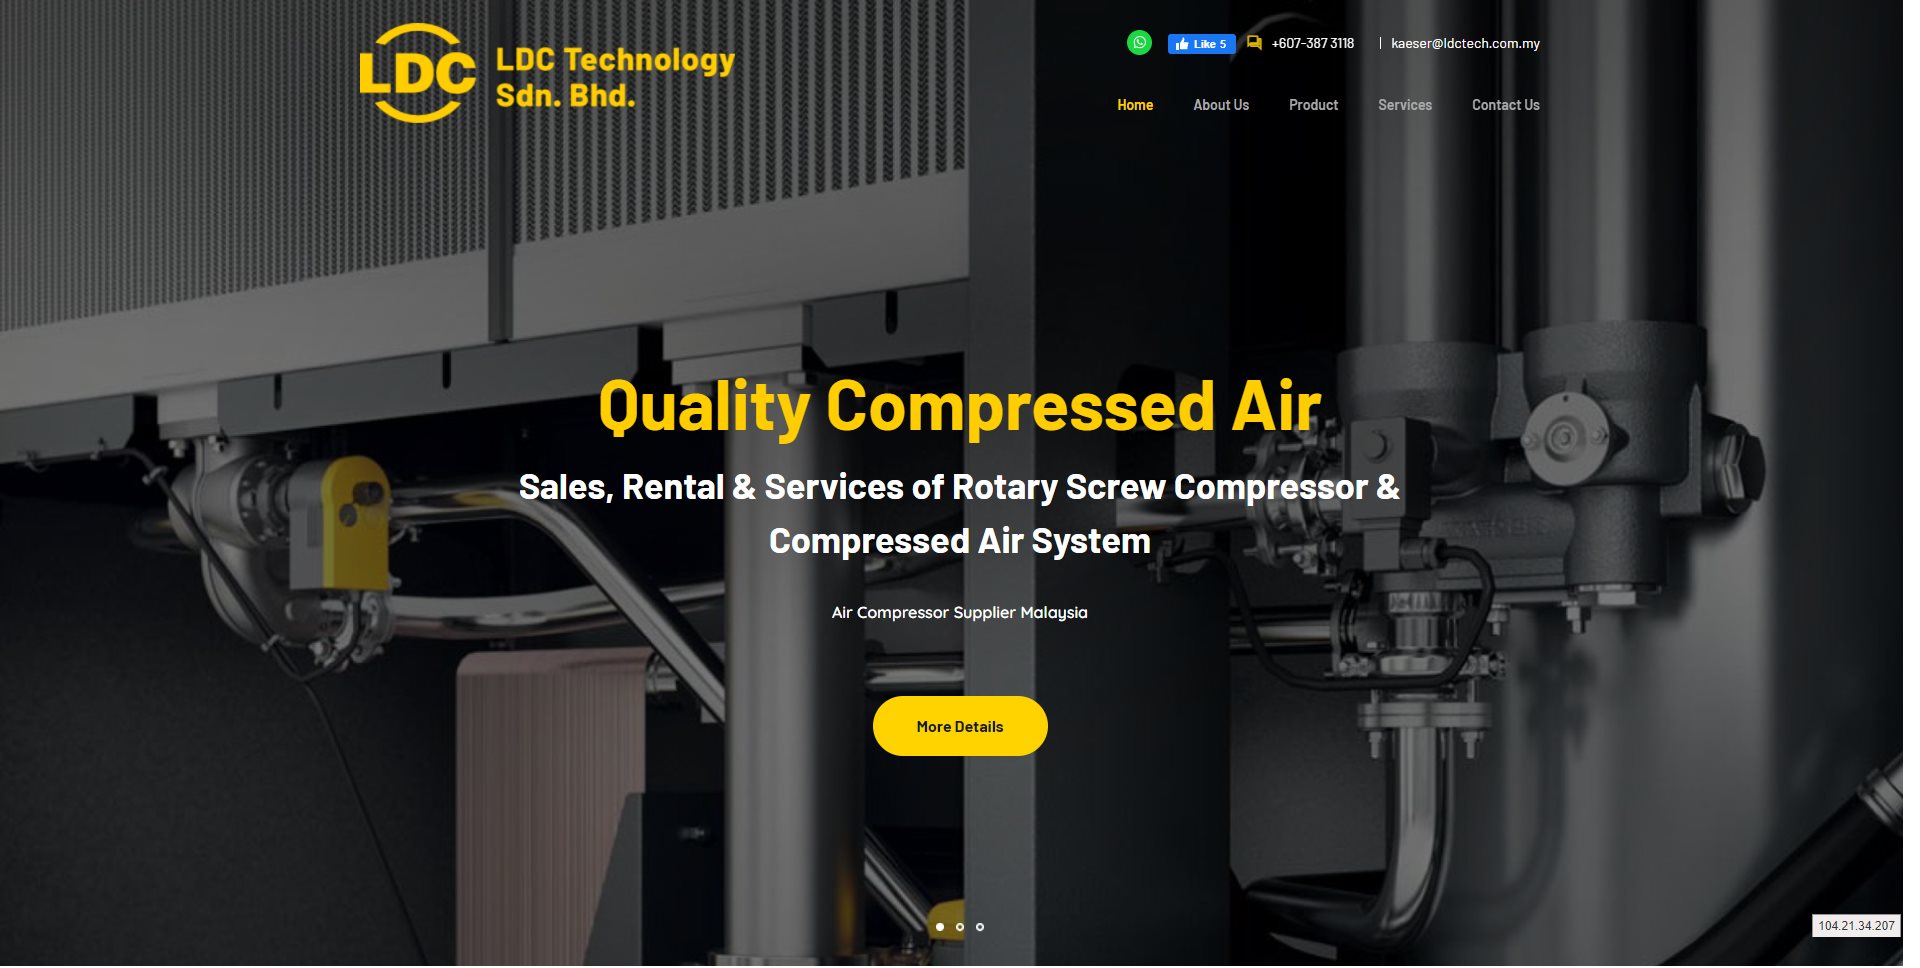 LDC Technology